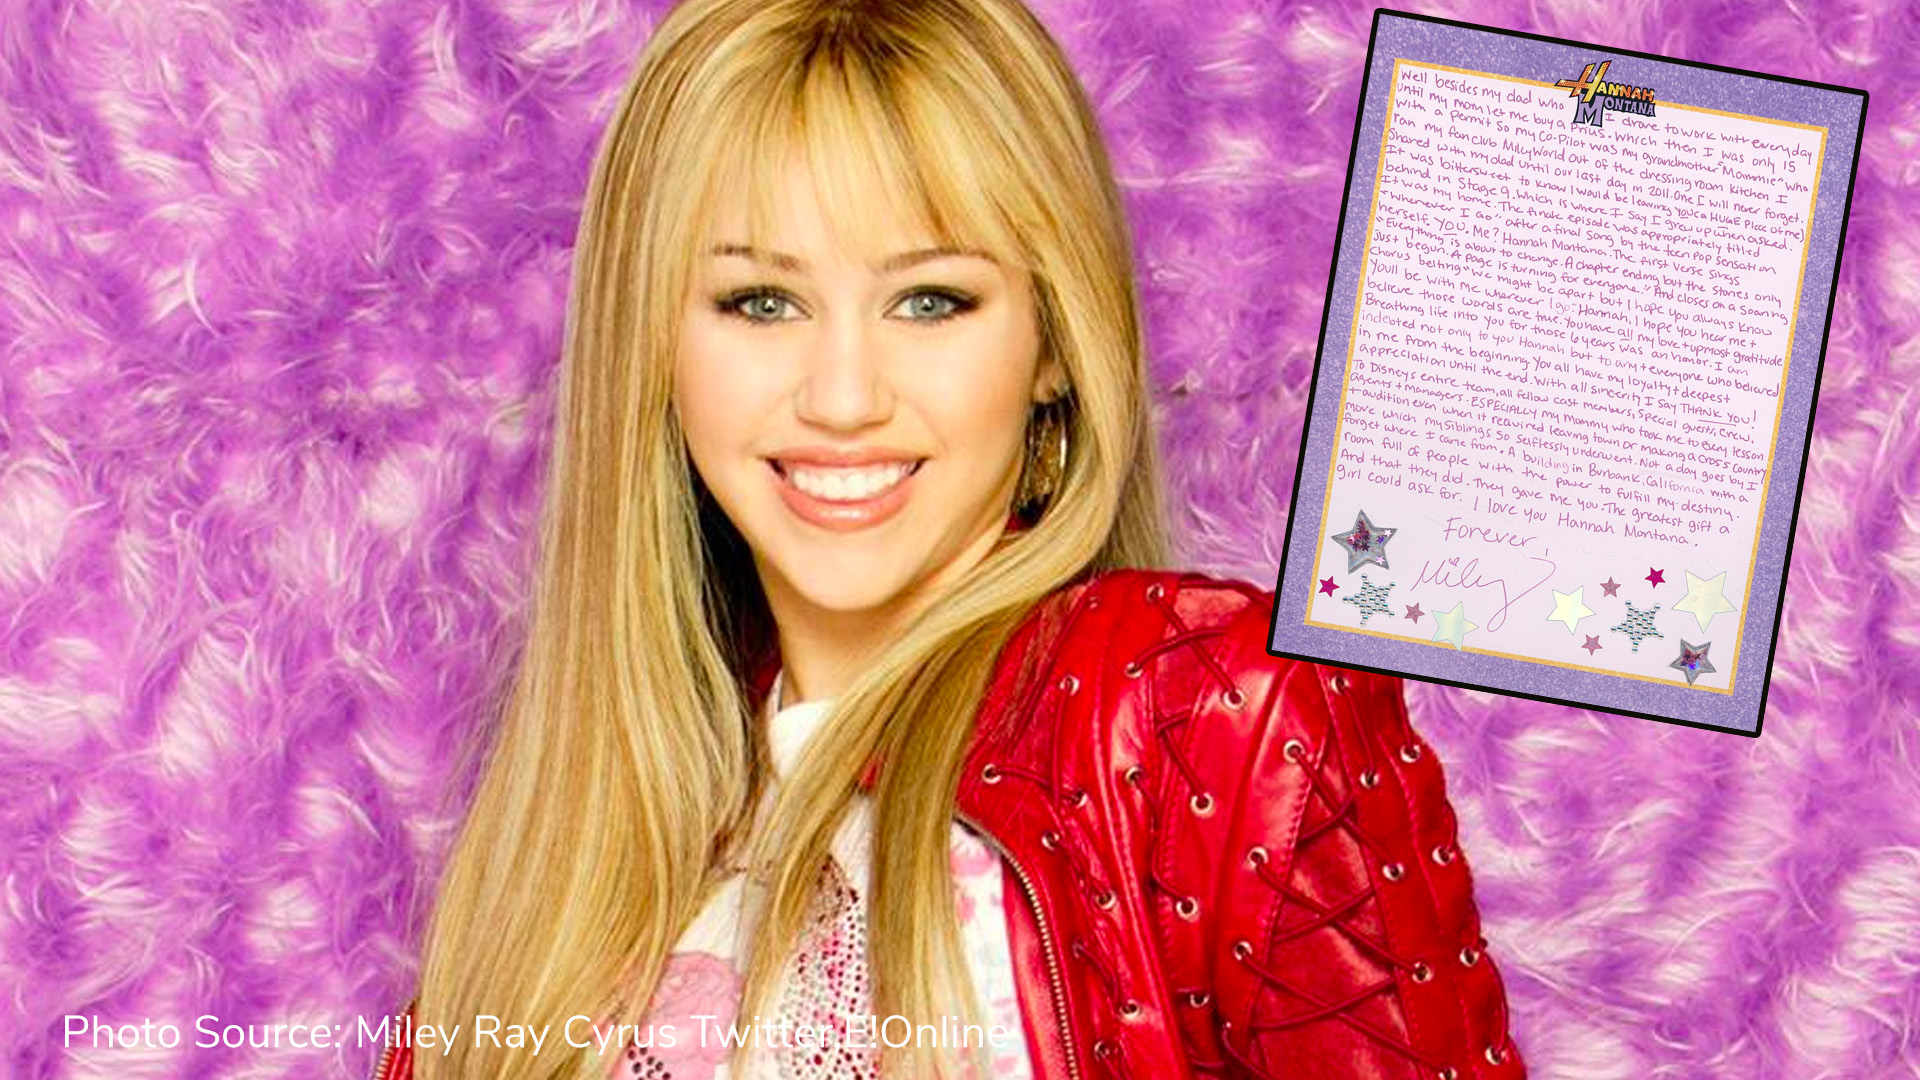 Miley Cyrus’ 15th anniversary tribute to Hannah Montana